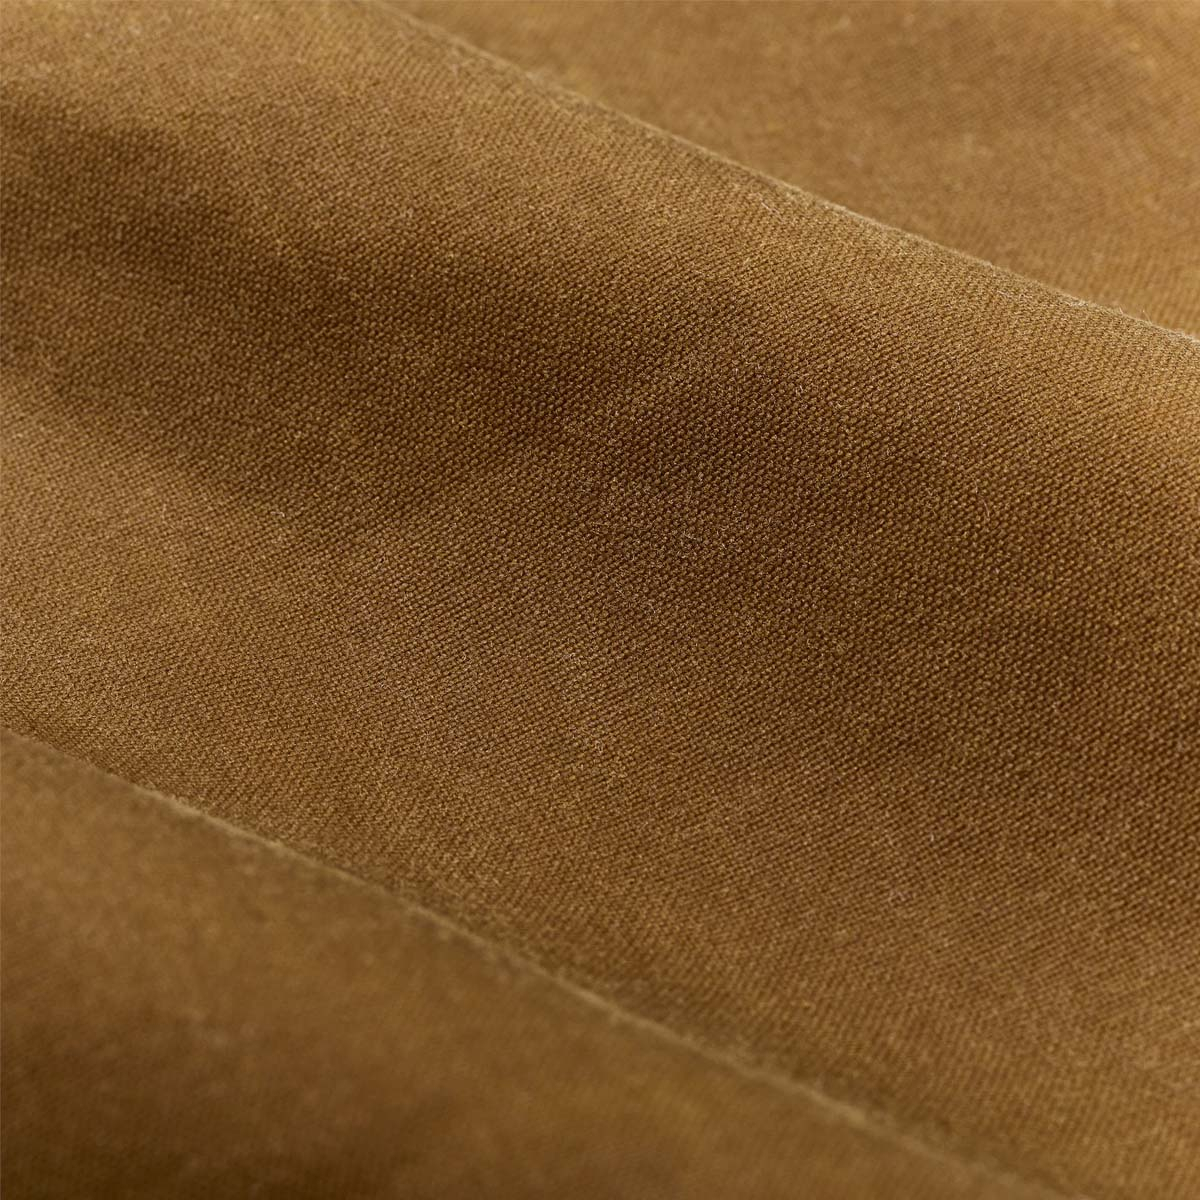 Filson Tin Cloth Insulated Work Vest Dark Tan, FILSON